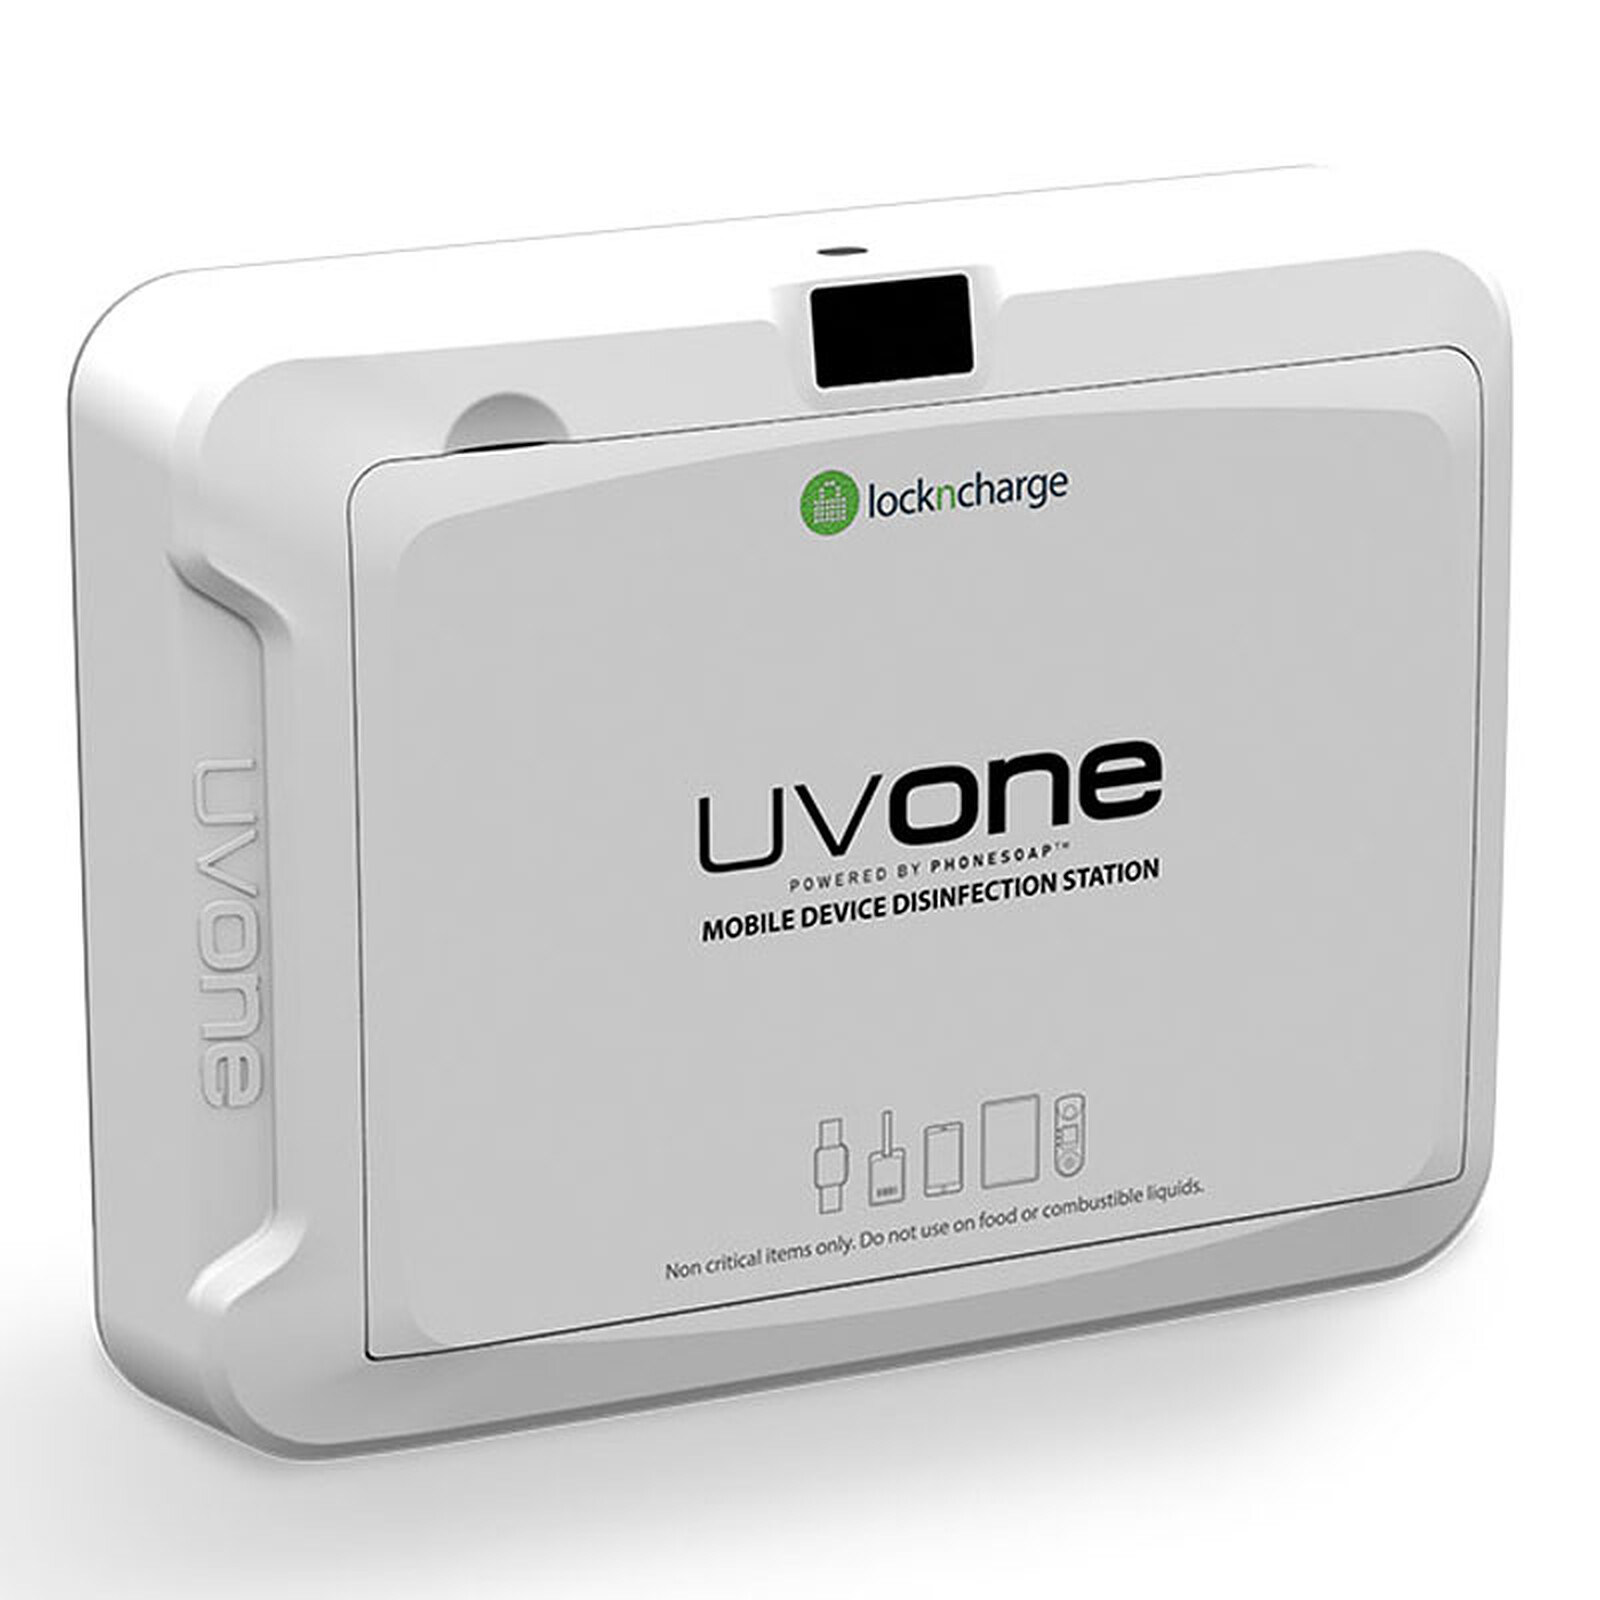 LocknCharge UVone - Accessoires divers smartphone - Garantie 3 ans